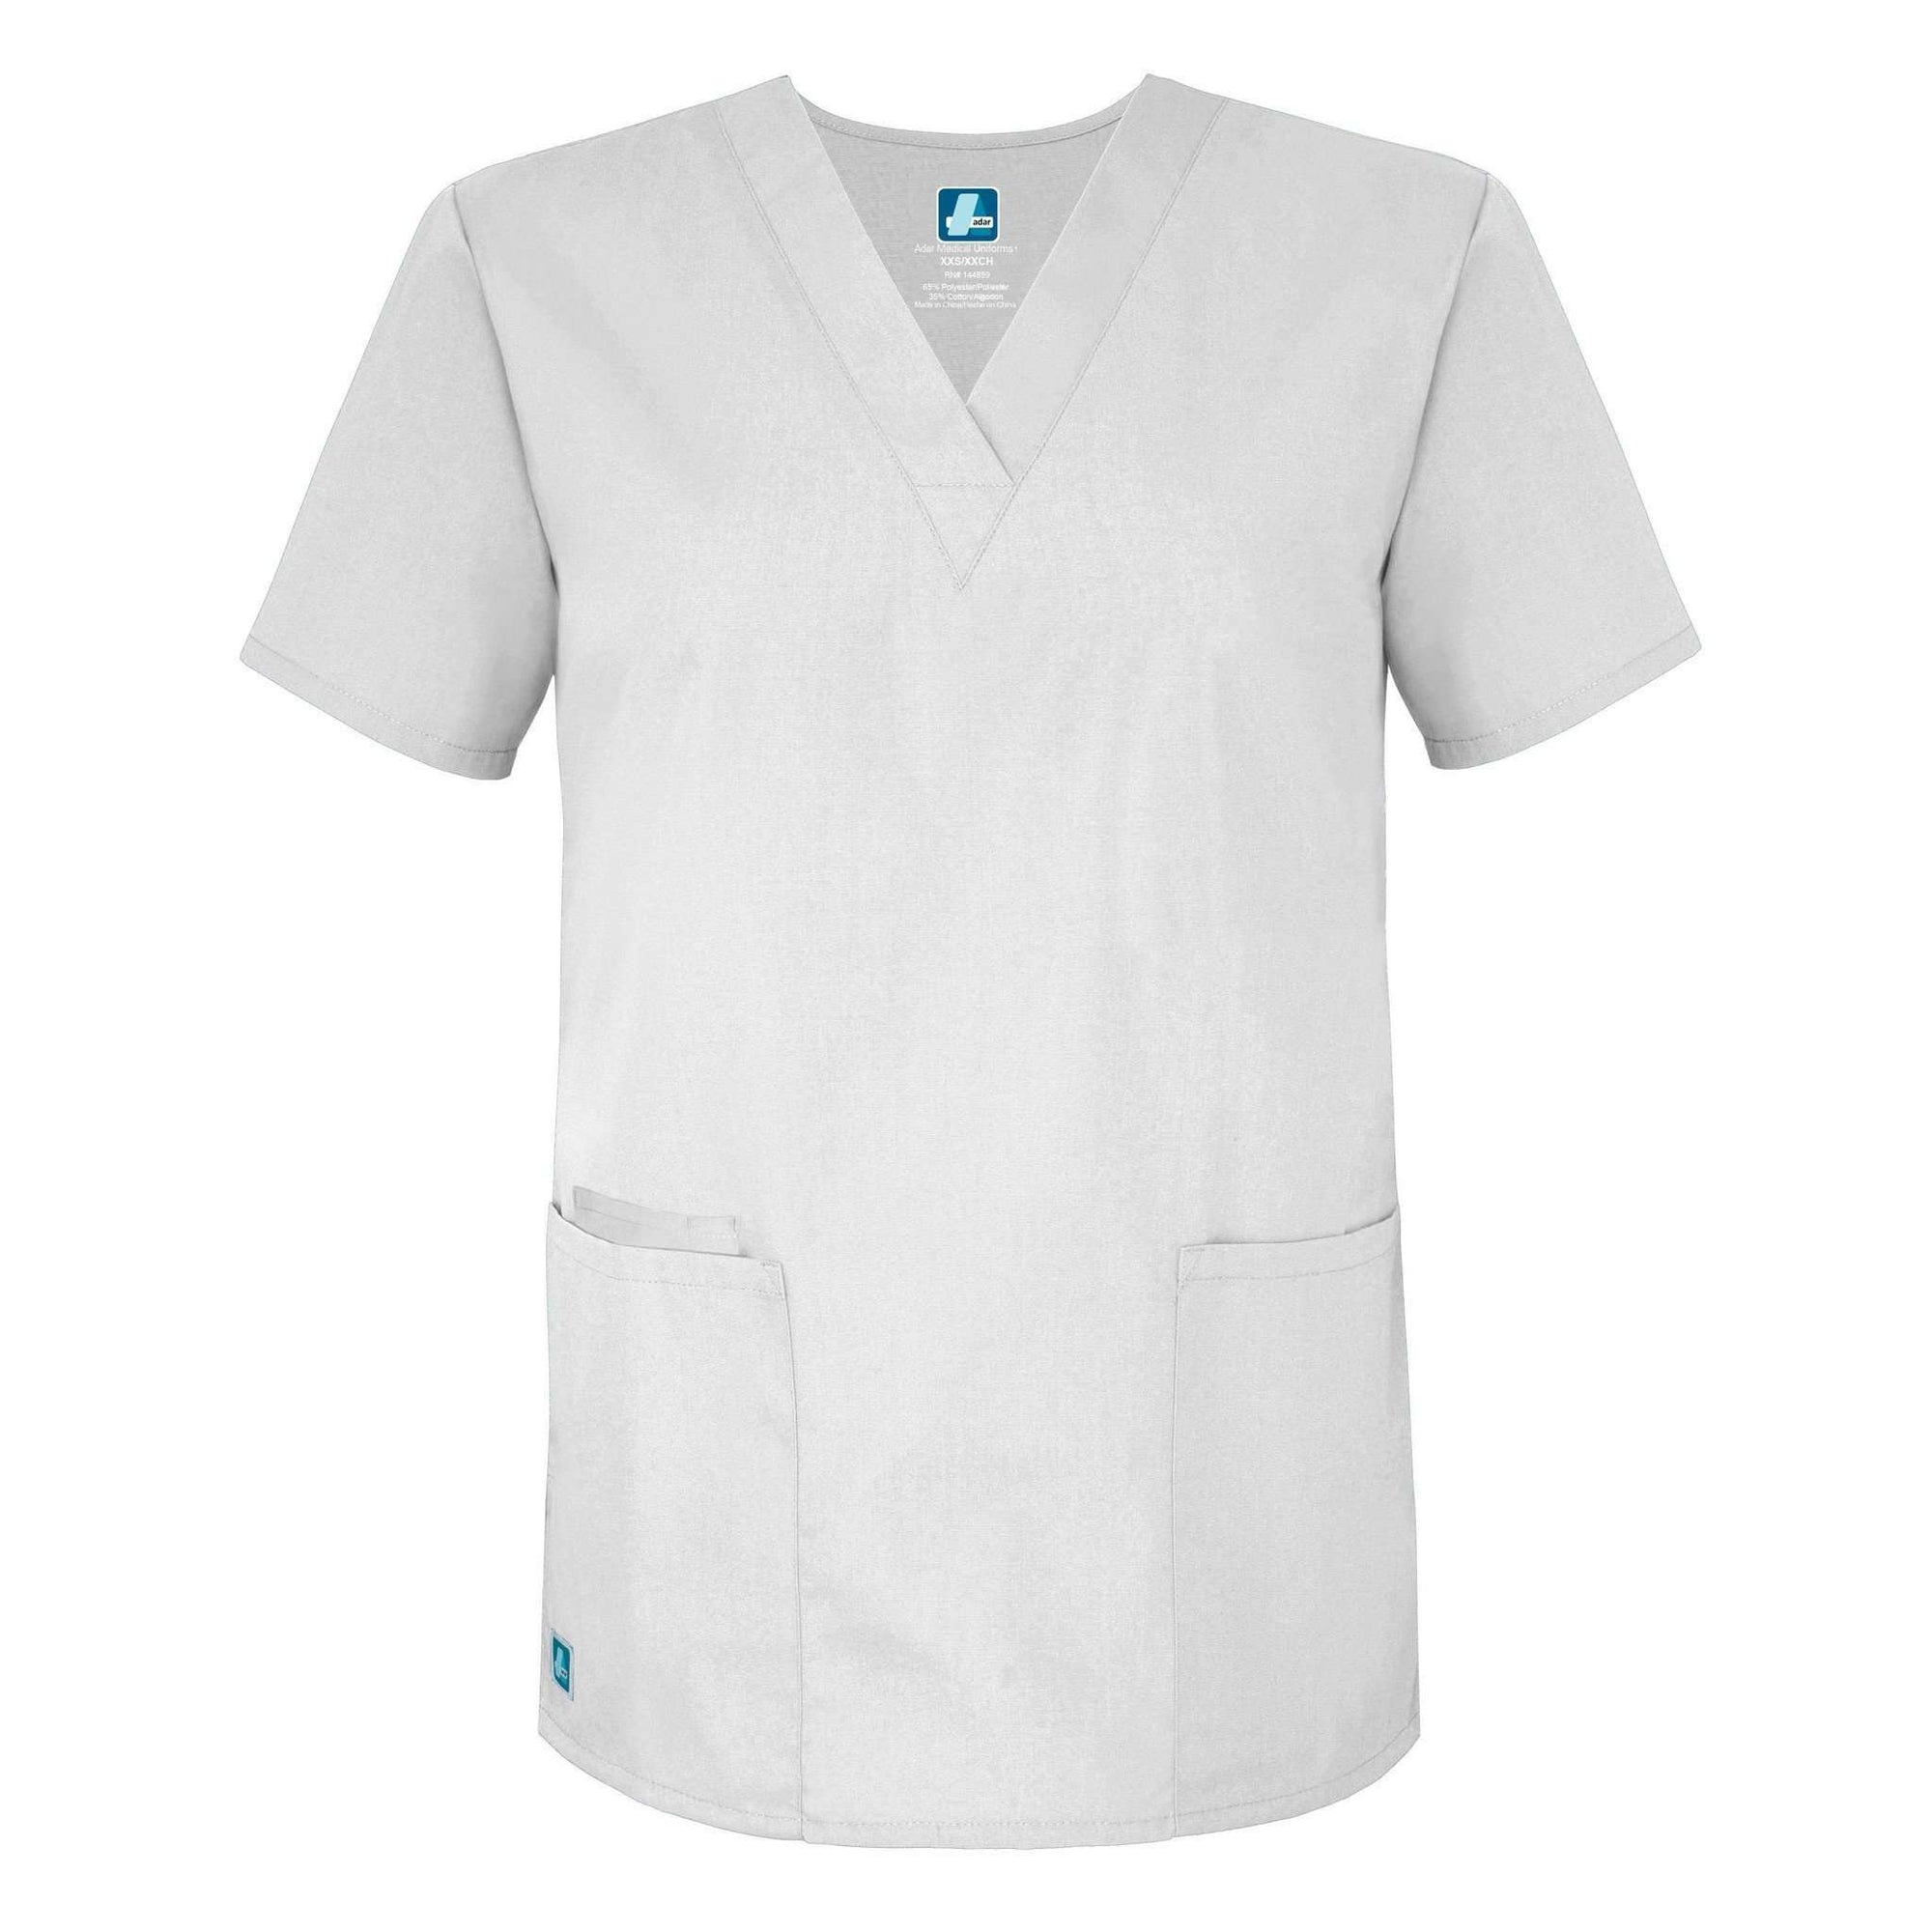  Adar - uniforms Medical Uniform Tops uniforms online Adar Universal Unisex V-Neck 2 Pocket Scrub Top White L - SchoolUniforms.com